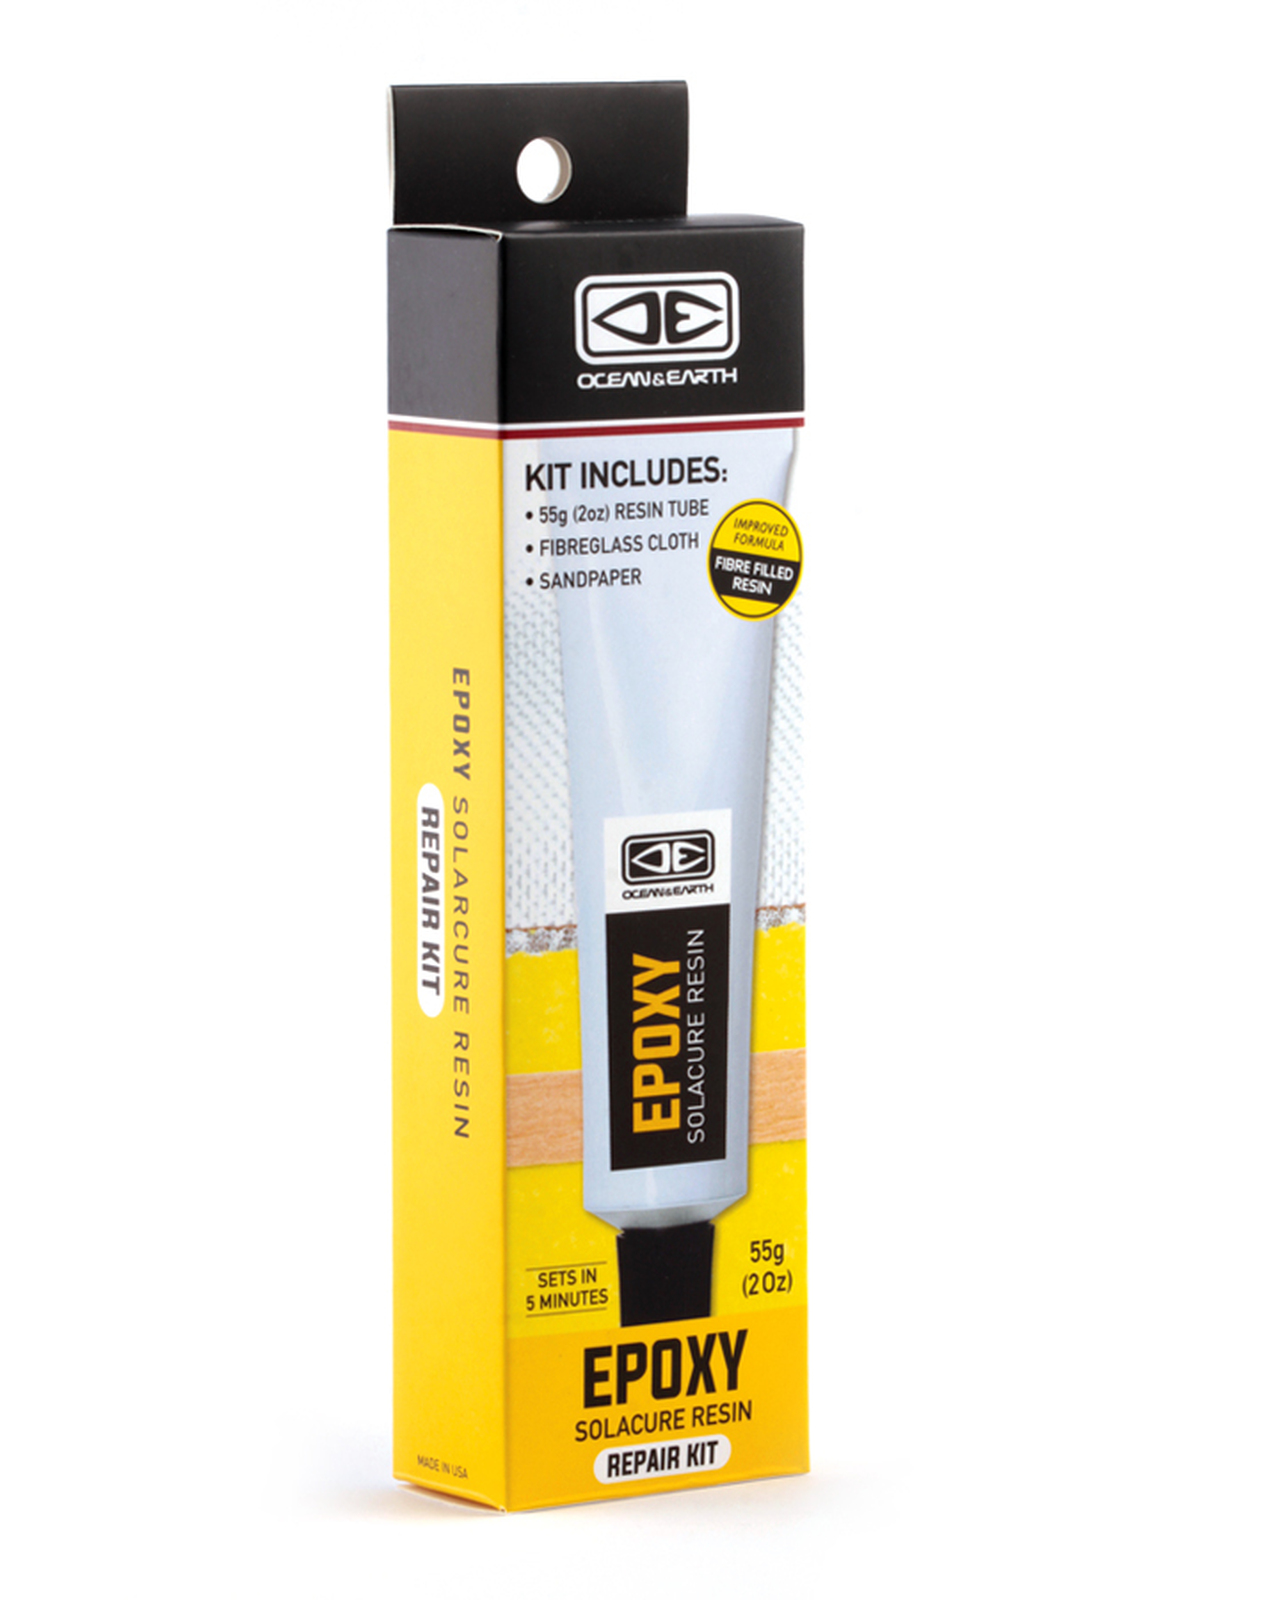 Solarcure Epoxy Resin Repair Kit